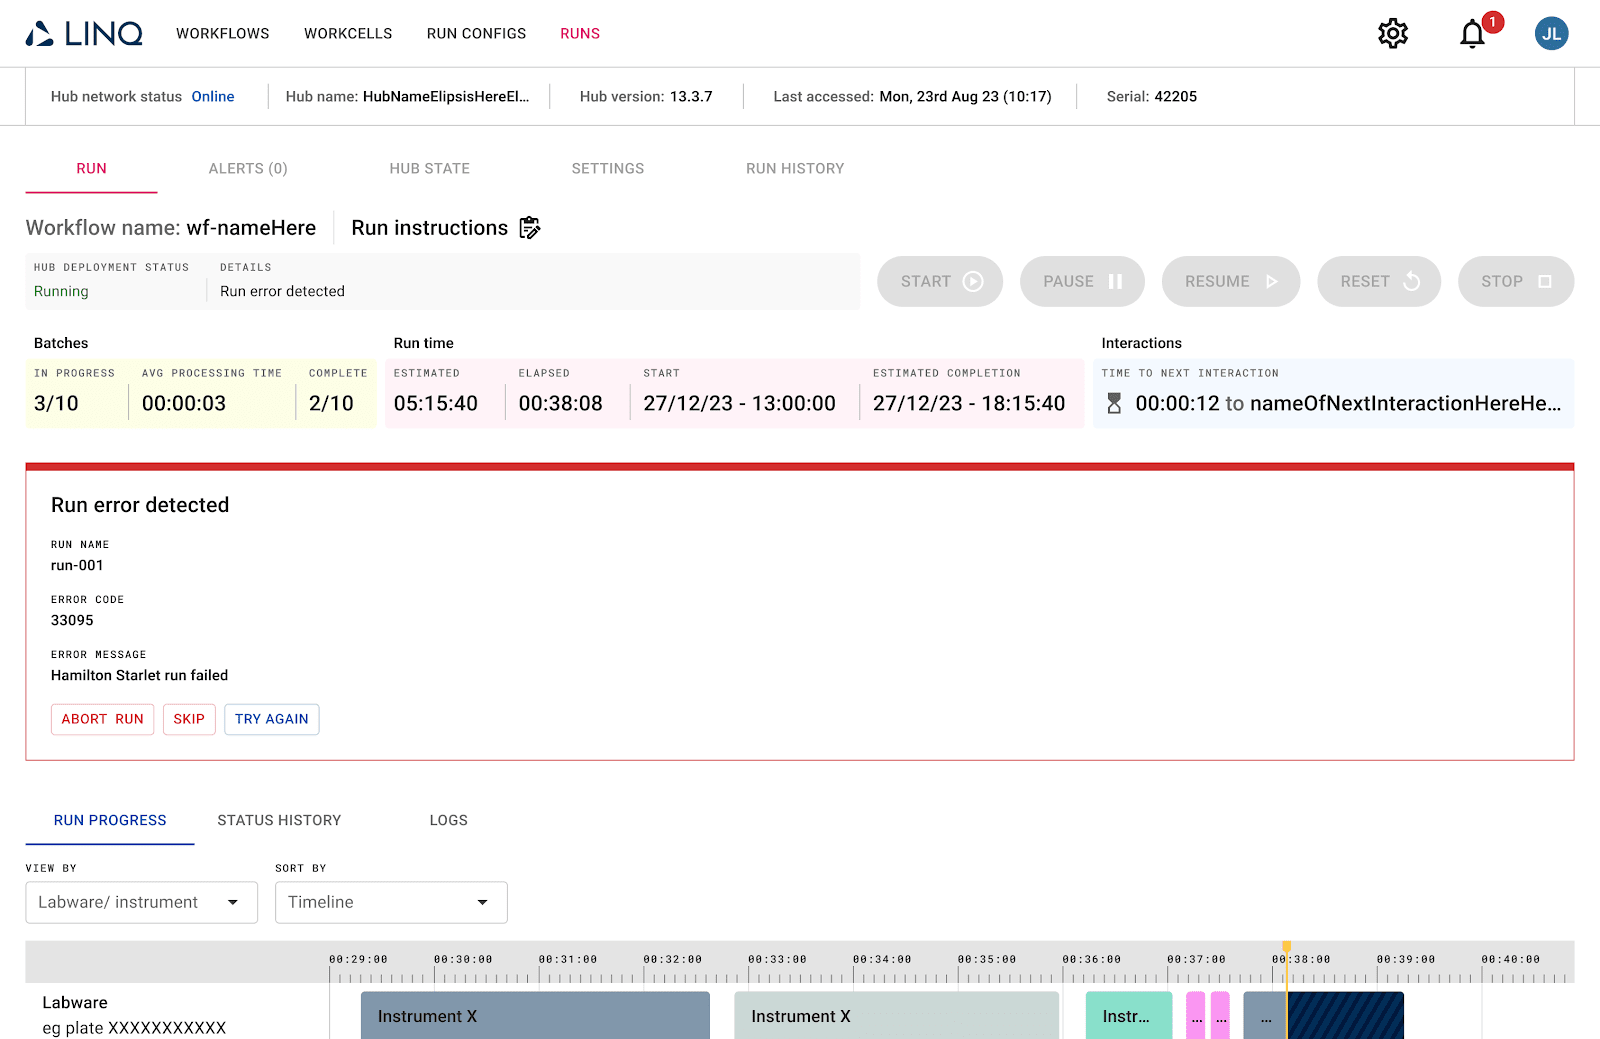 A screenshot of LINQ Cloud showing an error notification